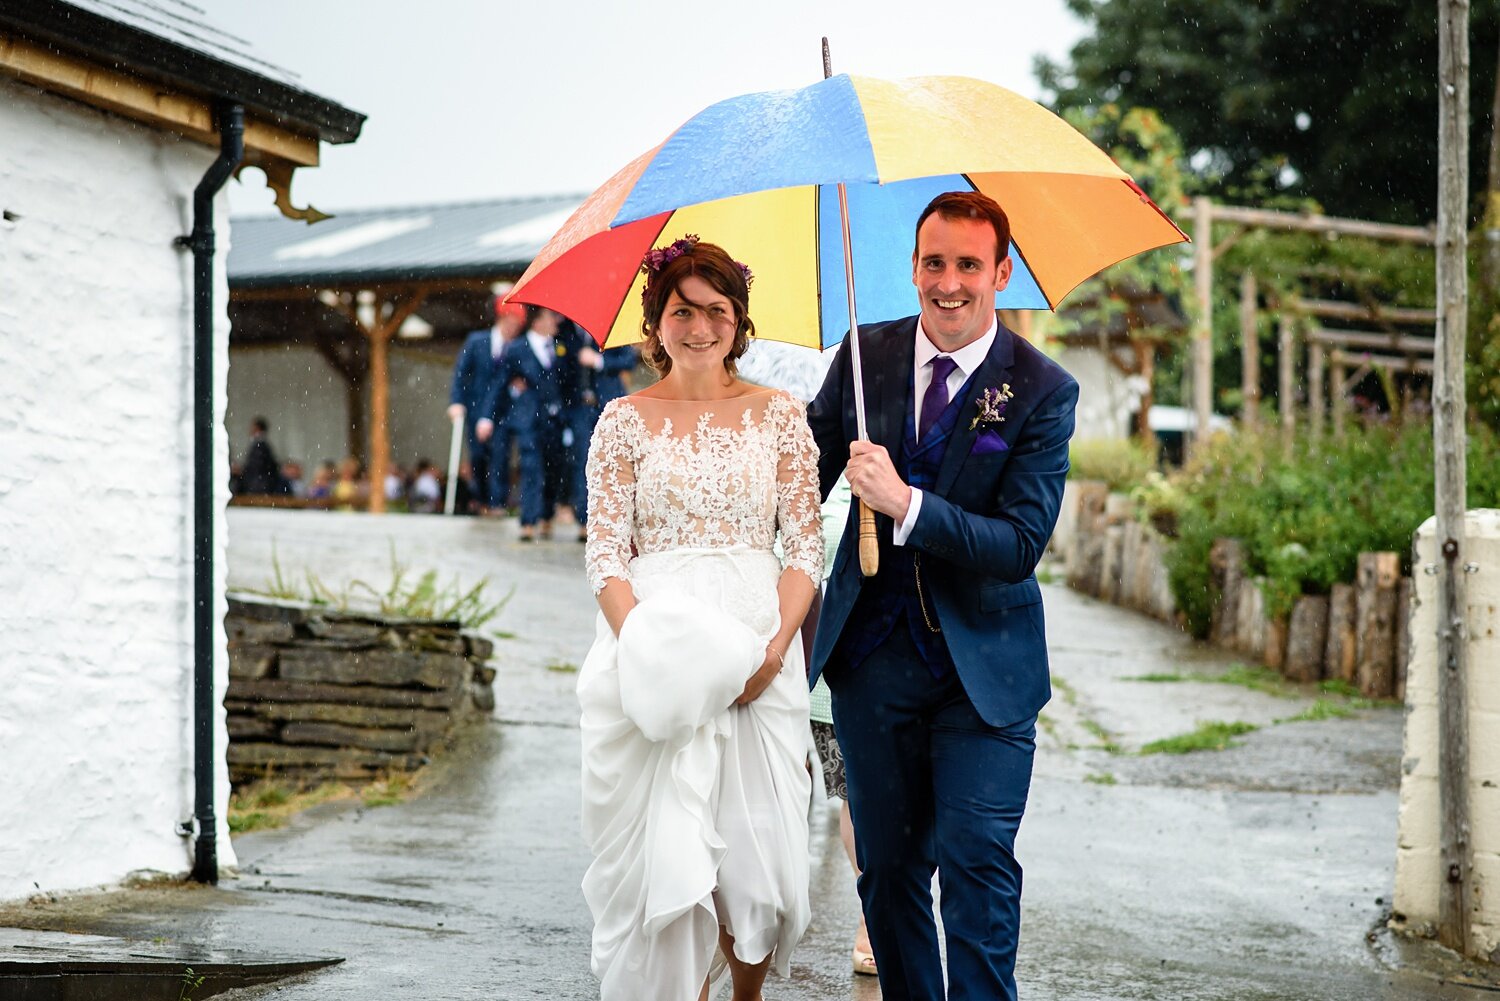 What happens if it rains on my wedding